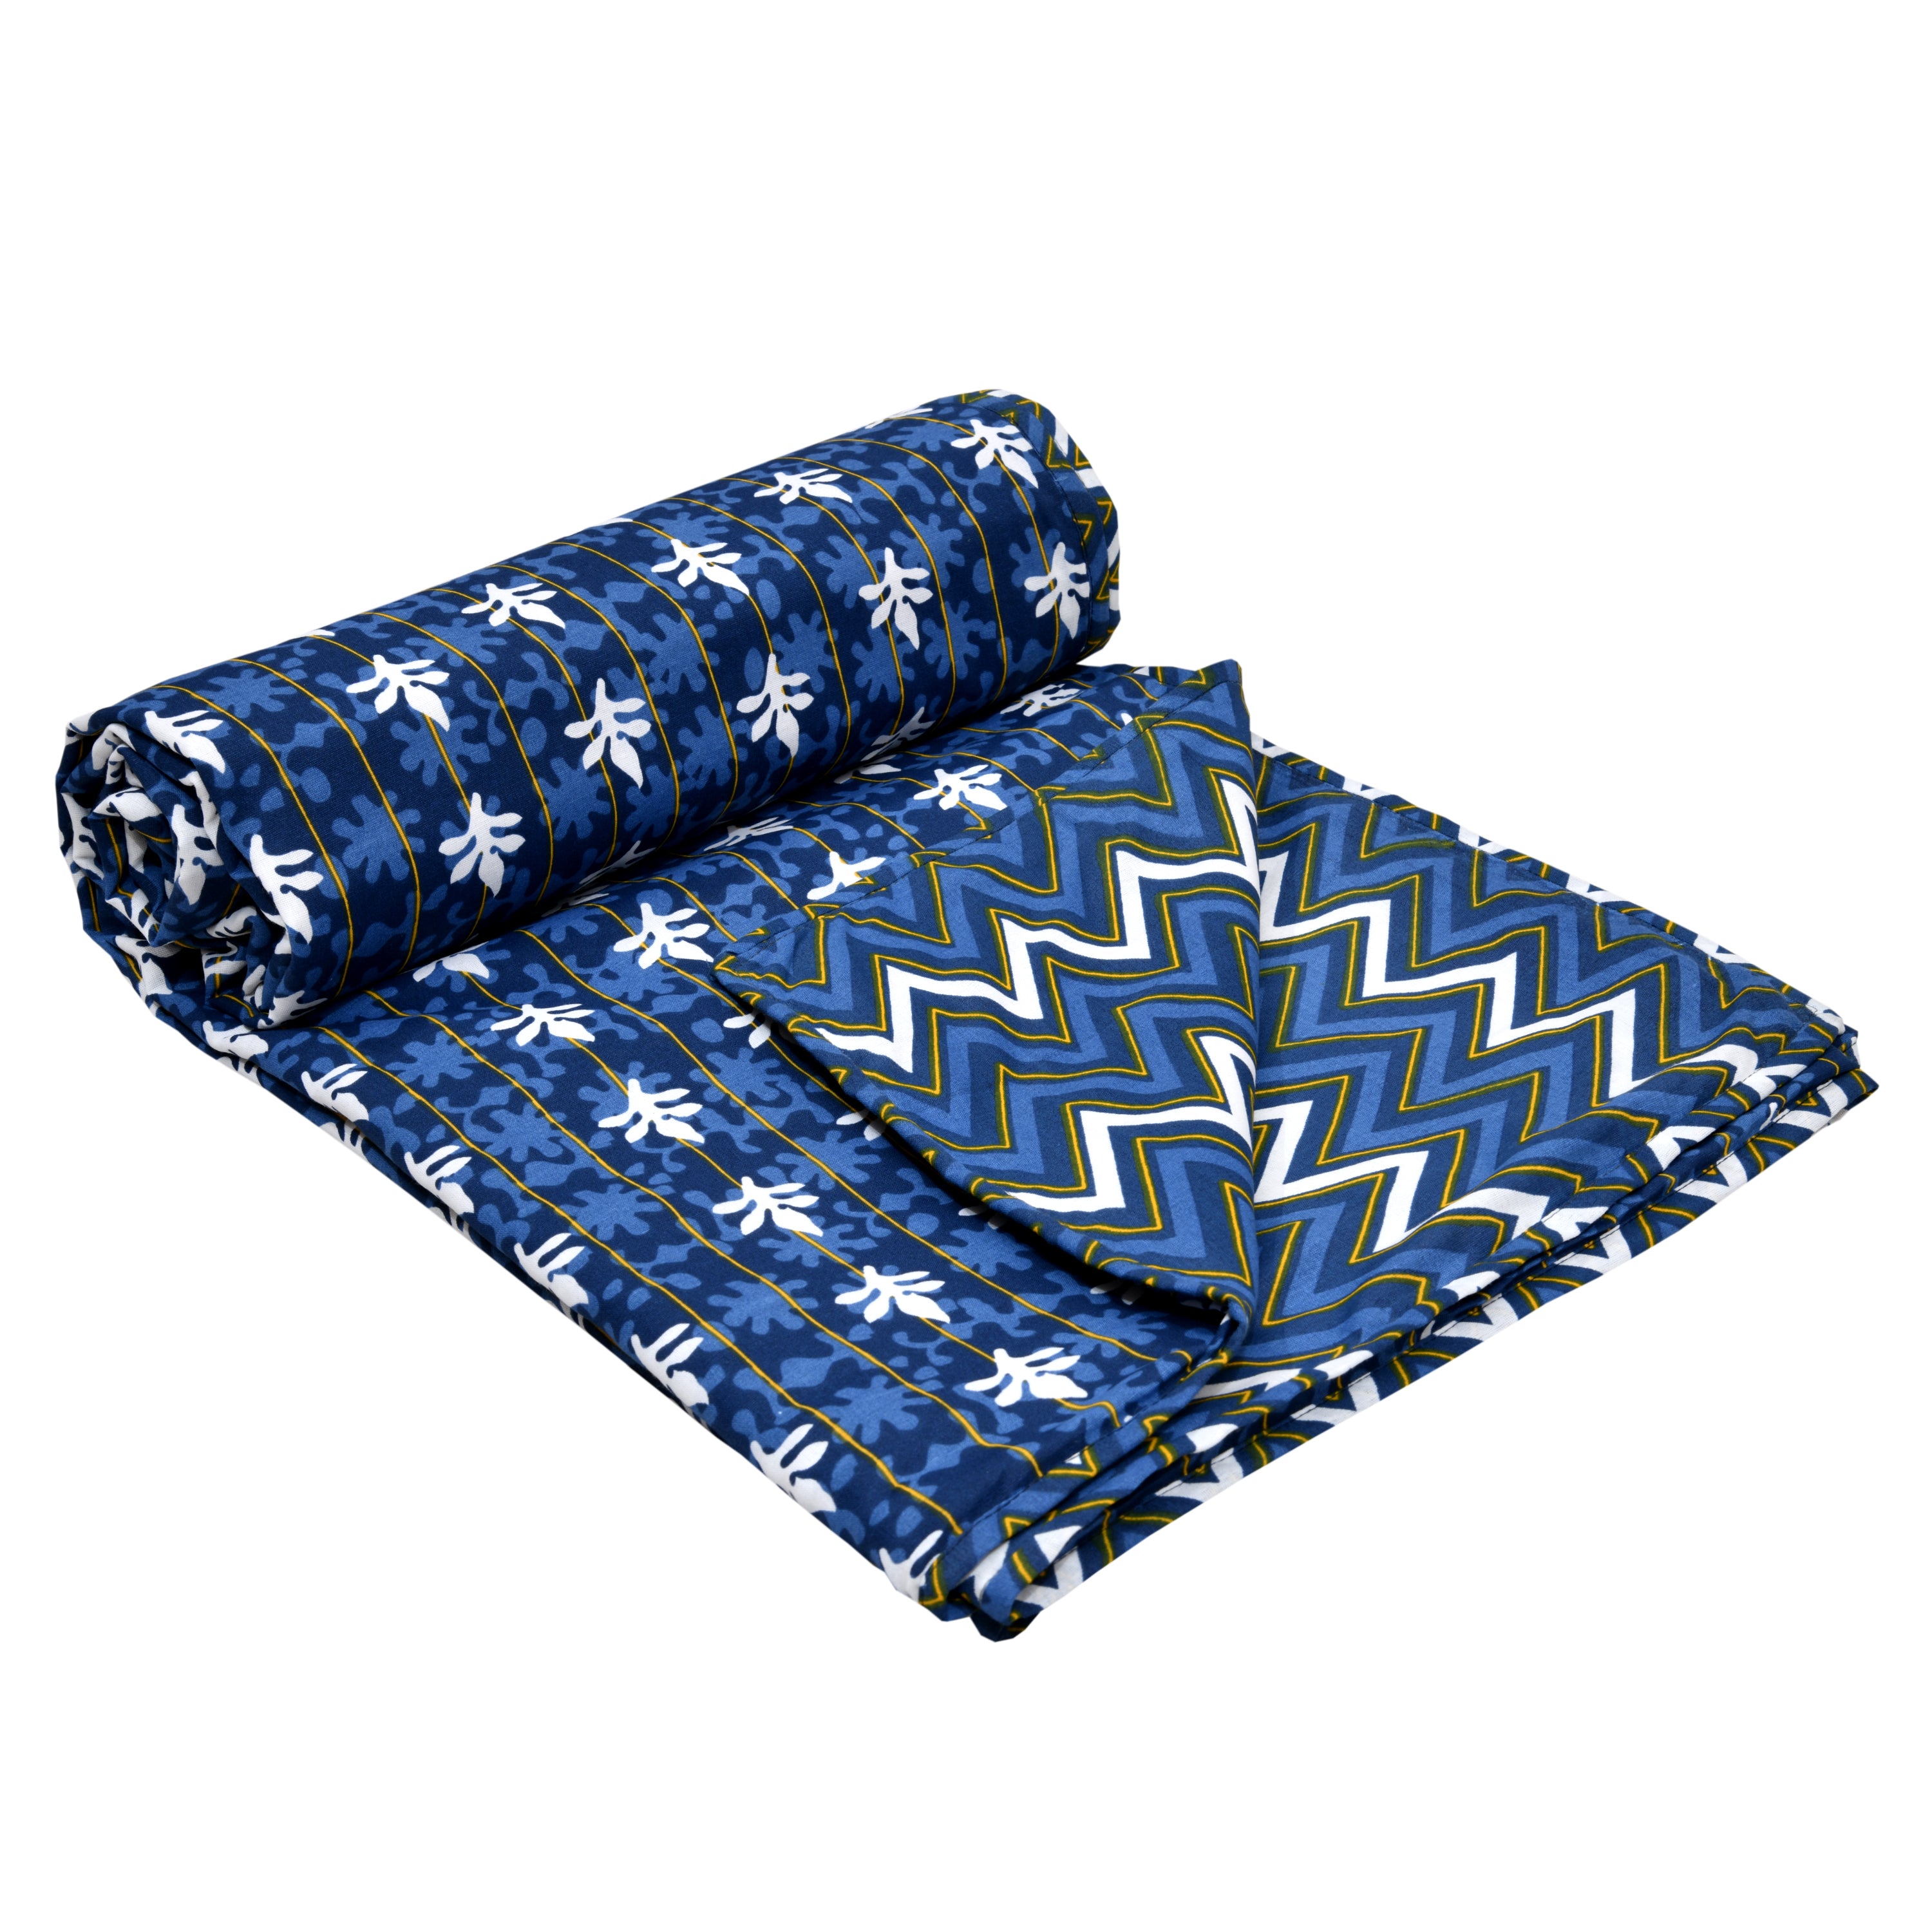 Dohar Cotton-Double Bed- Indigo Blue Waves